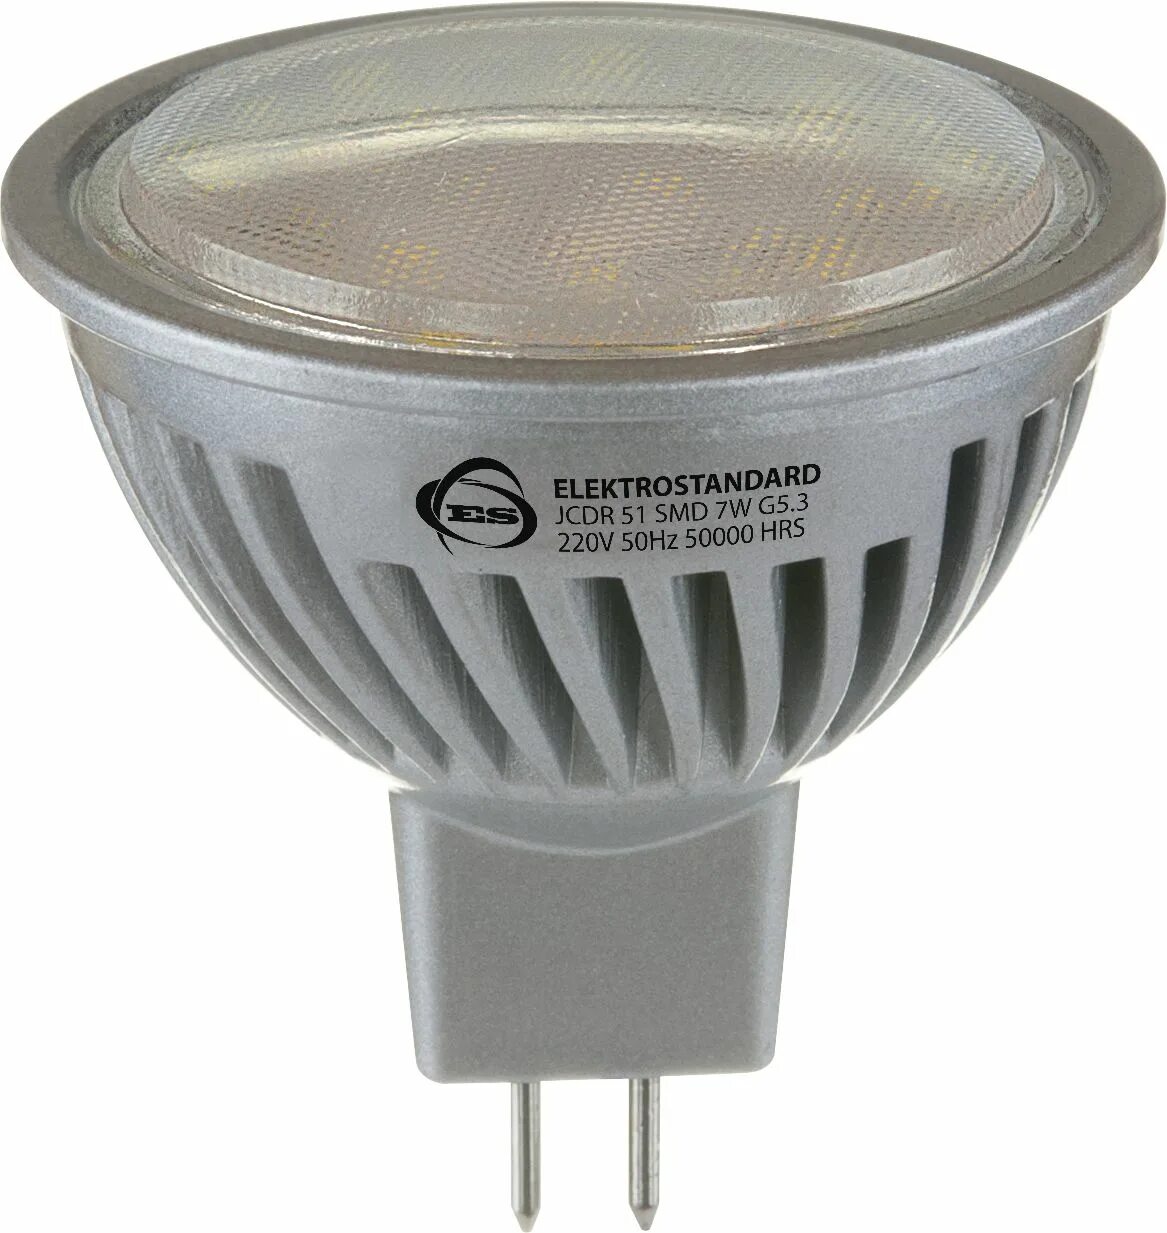 Светодиодная лампа jcdr. Лампа Elektrostandard JCDR 3w g5.3 220v. Светодиодные лампы g5 .3 220 JCDR. JCDR 7w 4200k gu10. JCDR-G5.3 7w.